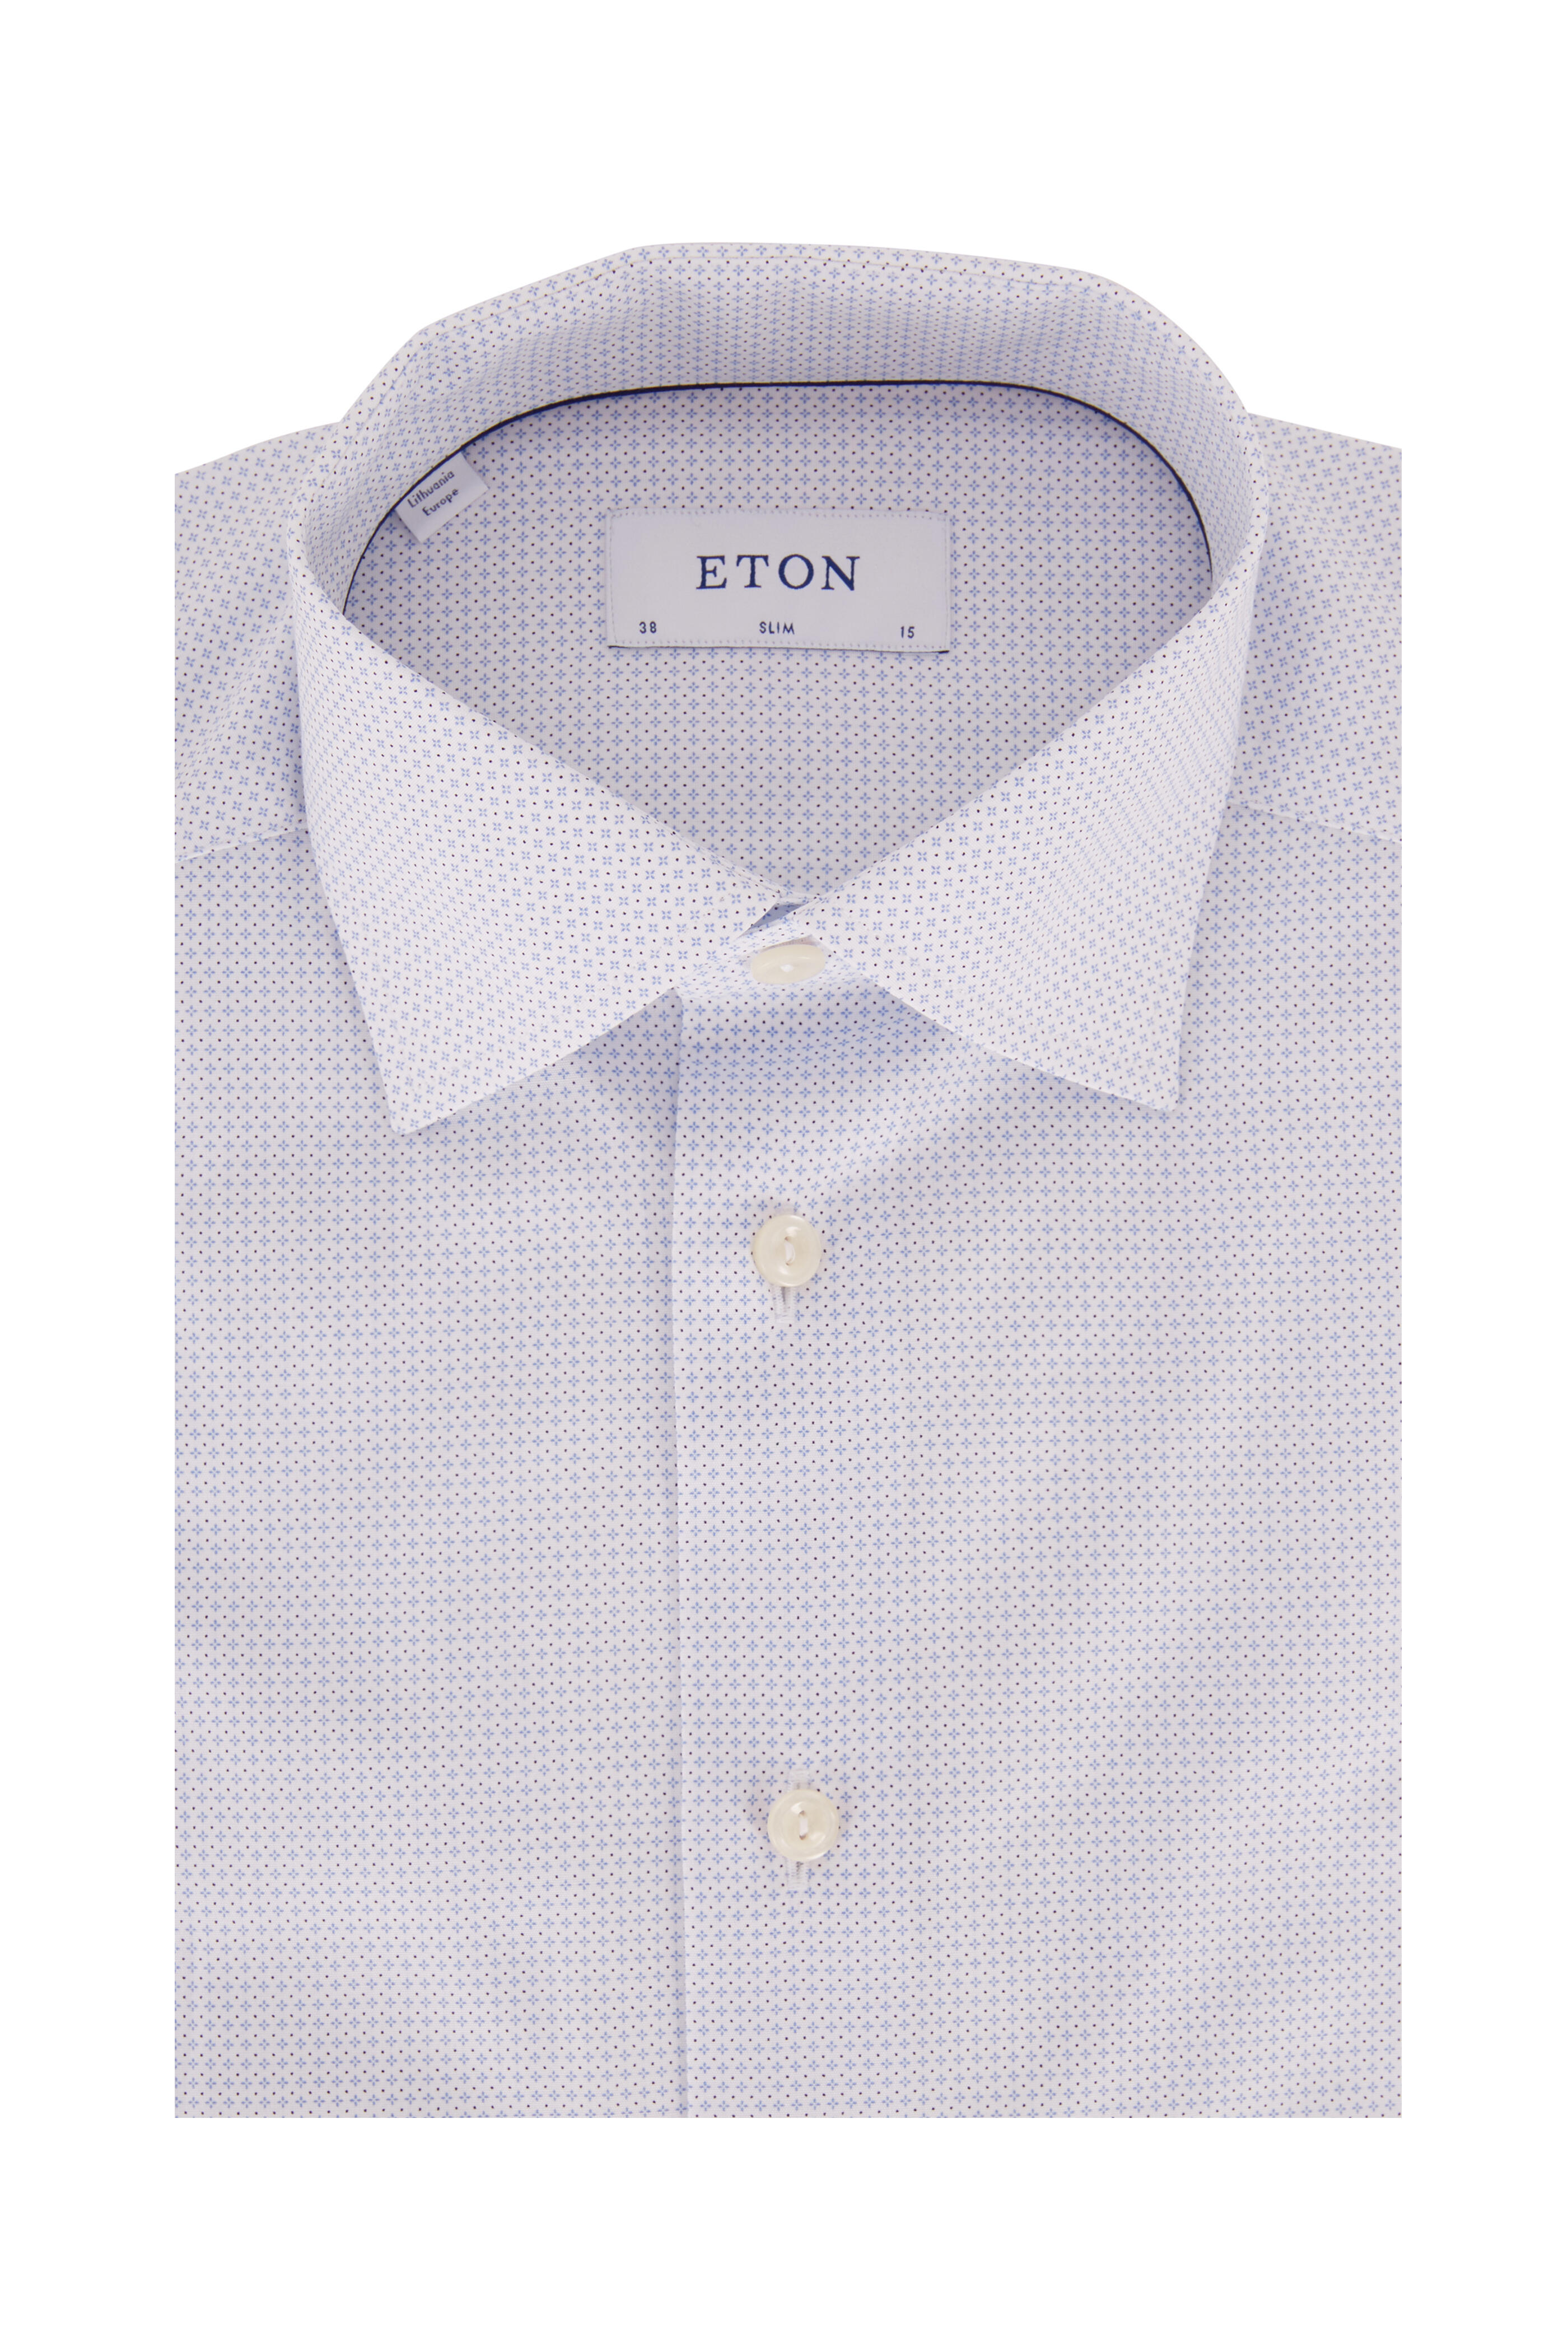 Eton Men's Slim-Fit Geometric Print Shirt